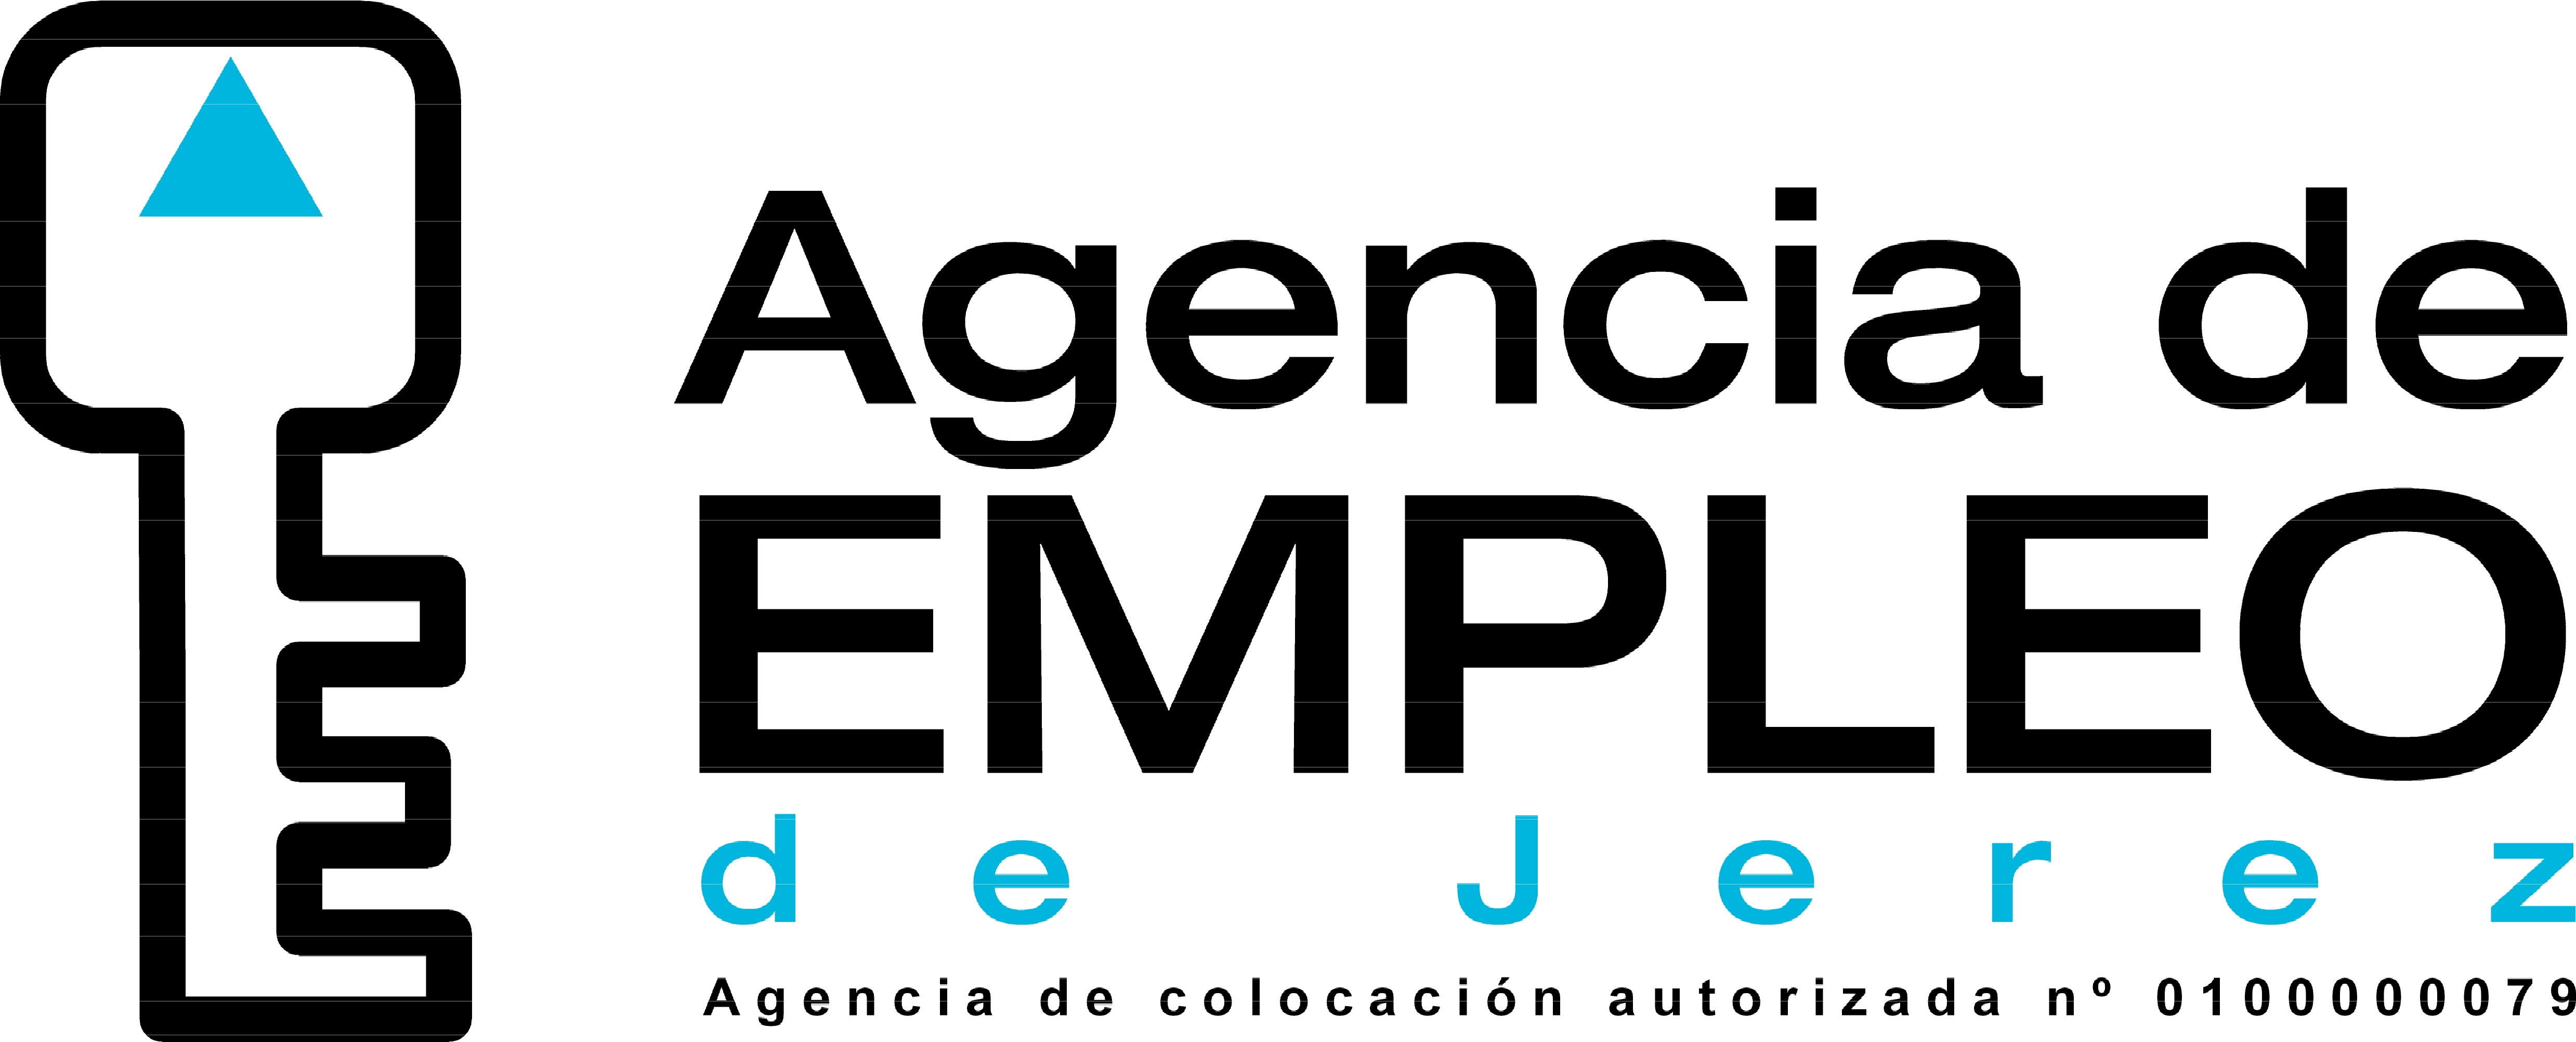 Logo de la Agencia de Empleo de Jerez